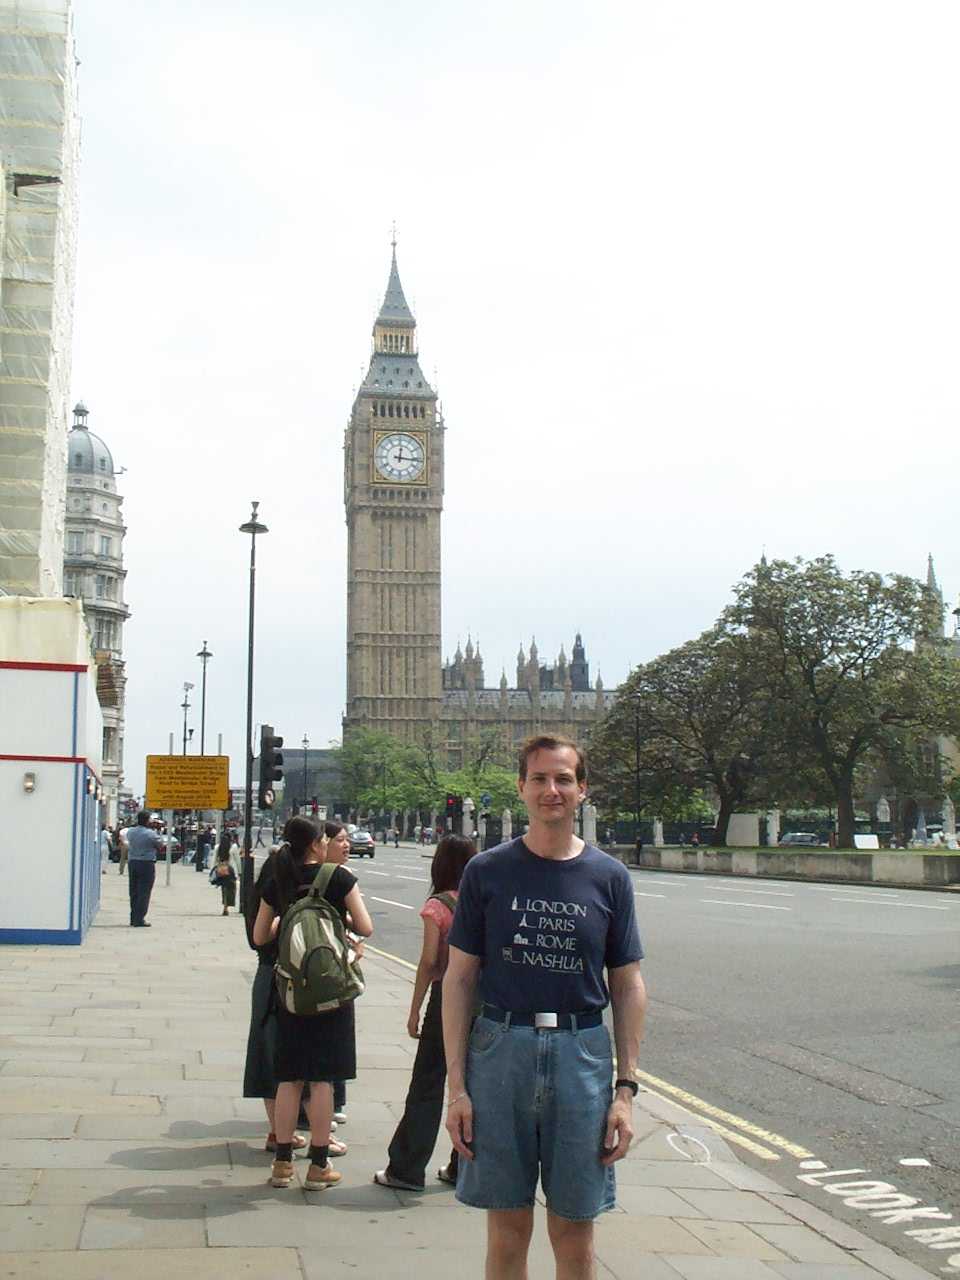 T-shirt in London